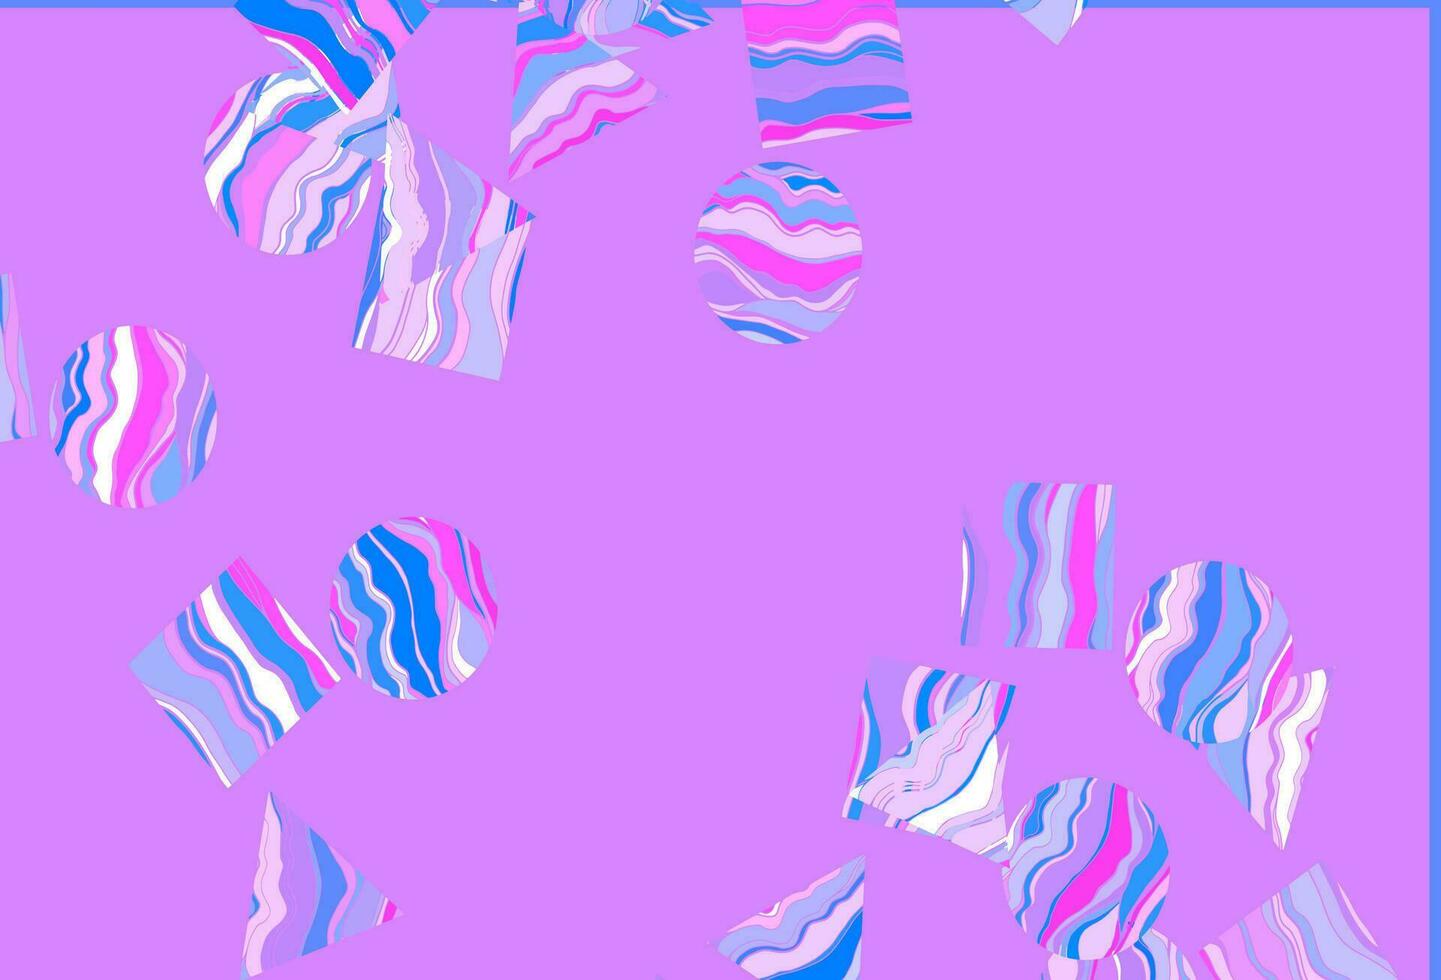 textura vector rosa, azul claro em estilo poli com círculos, cubos.